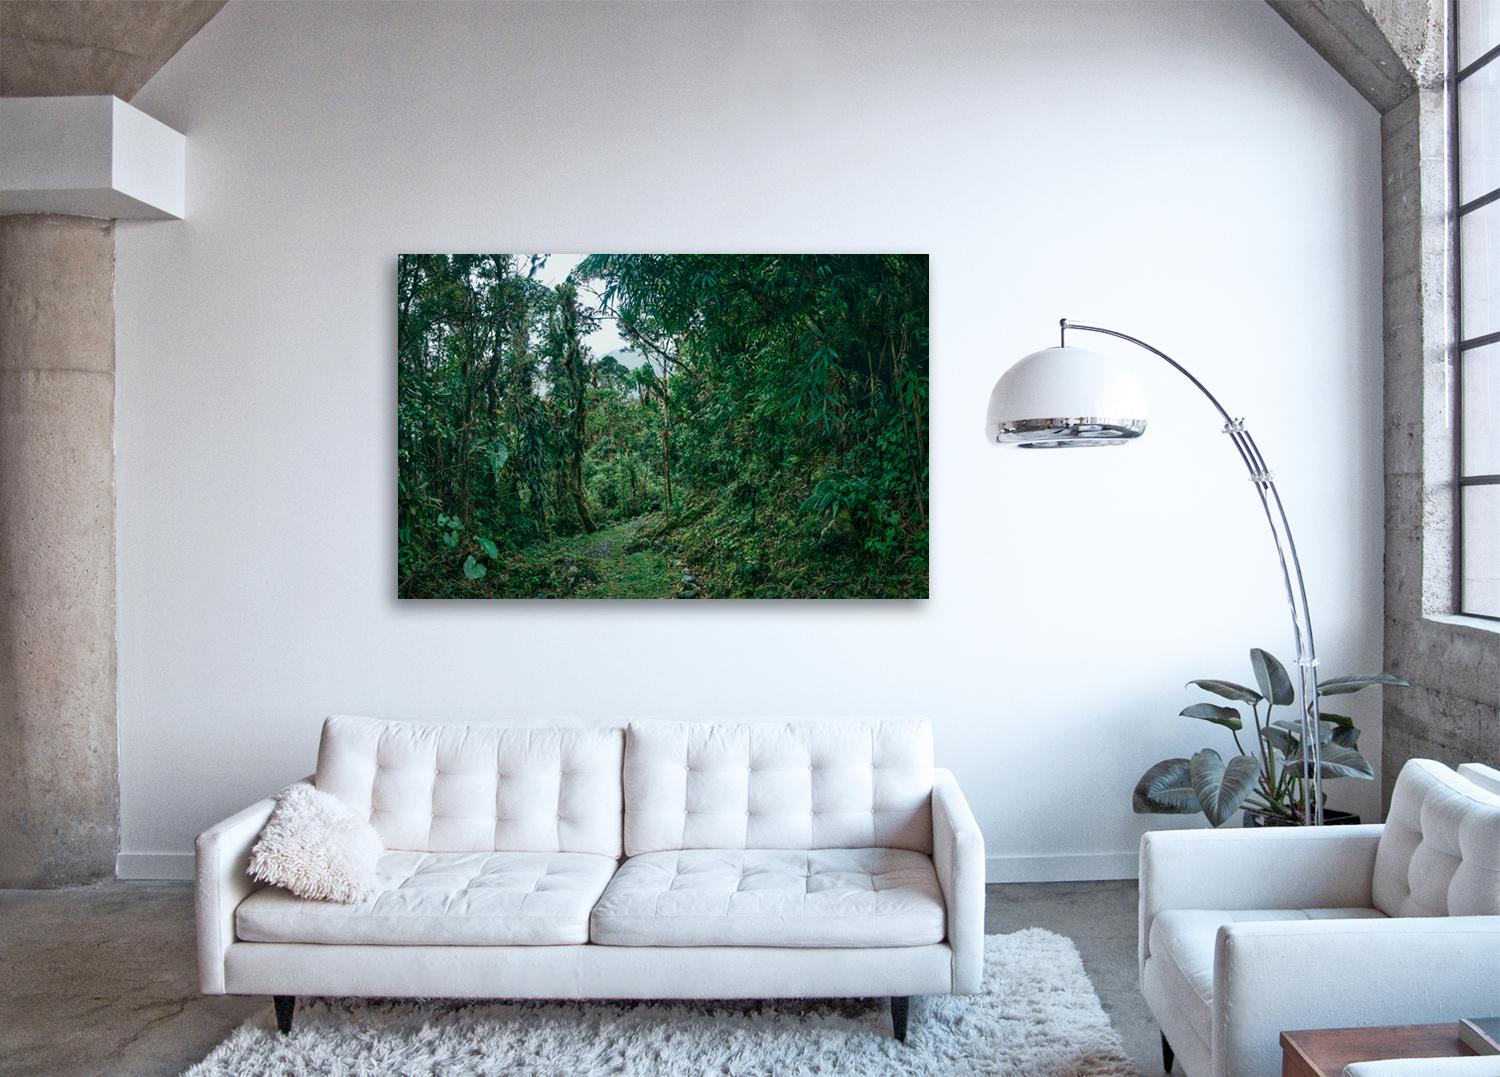 Cloud Forest II  - large format photograph of fantastical tropical rainforest - Print by Erik Pawassar